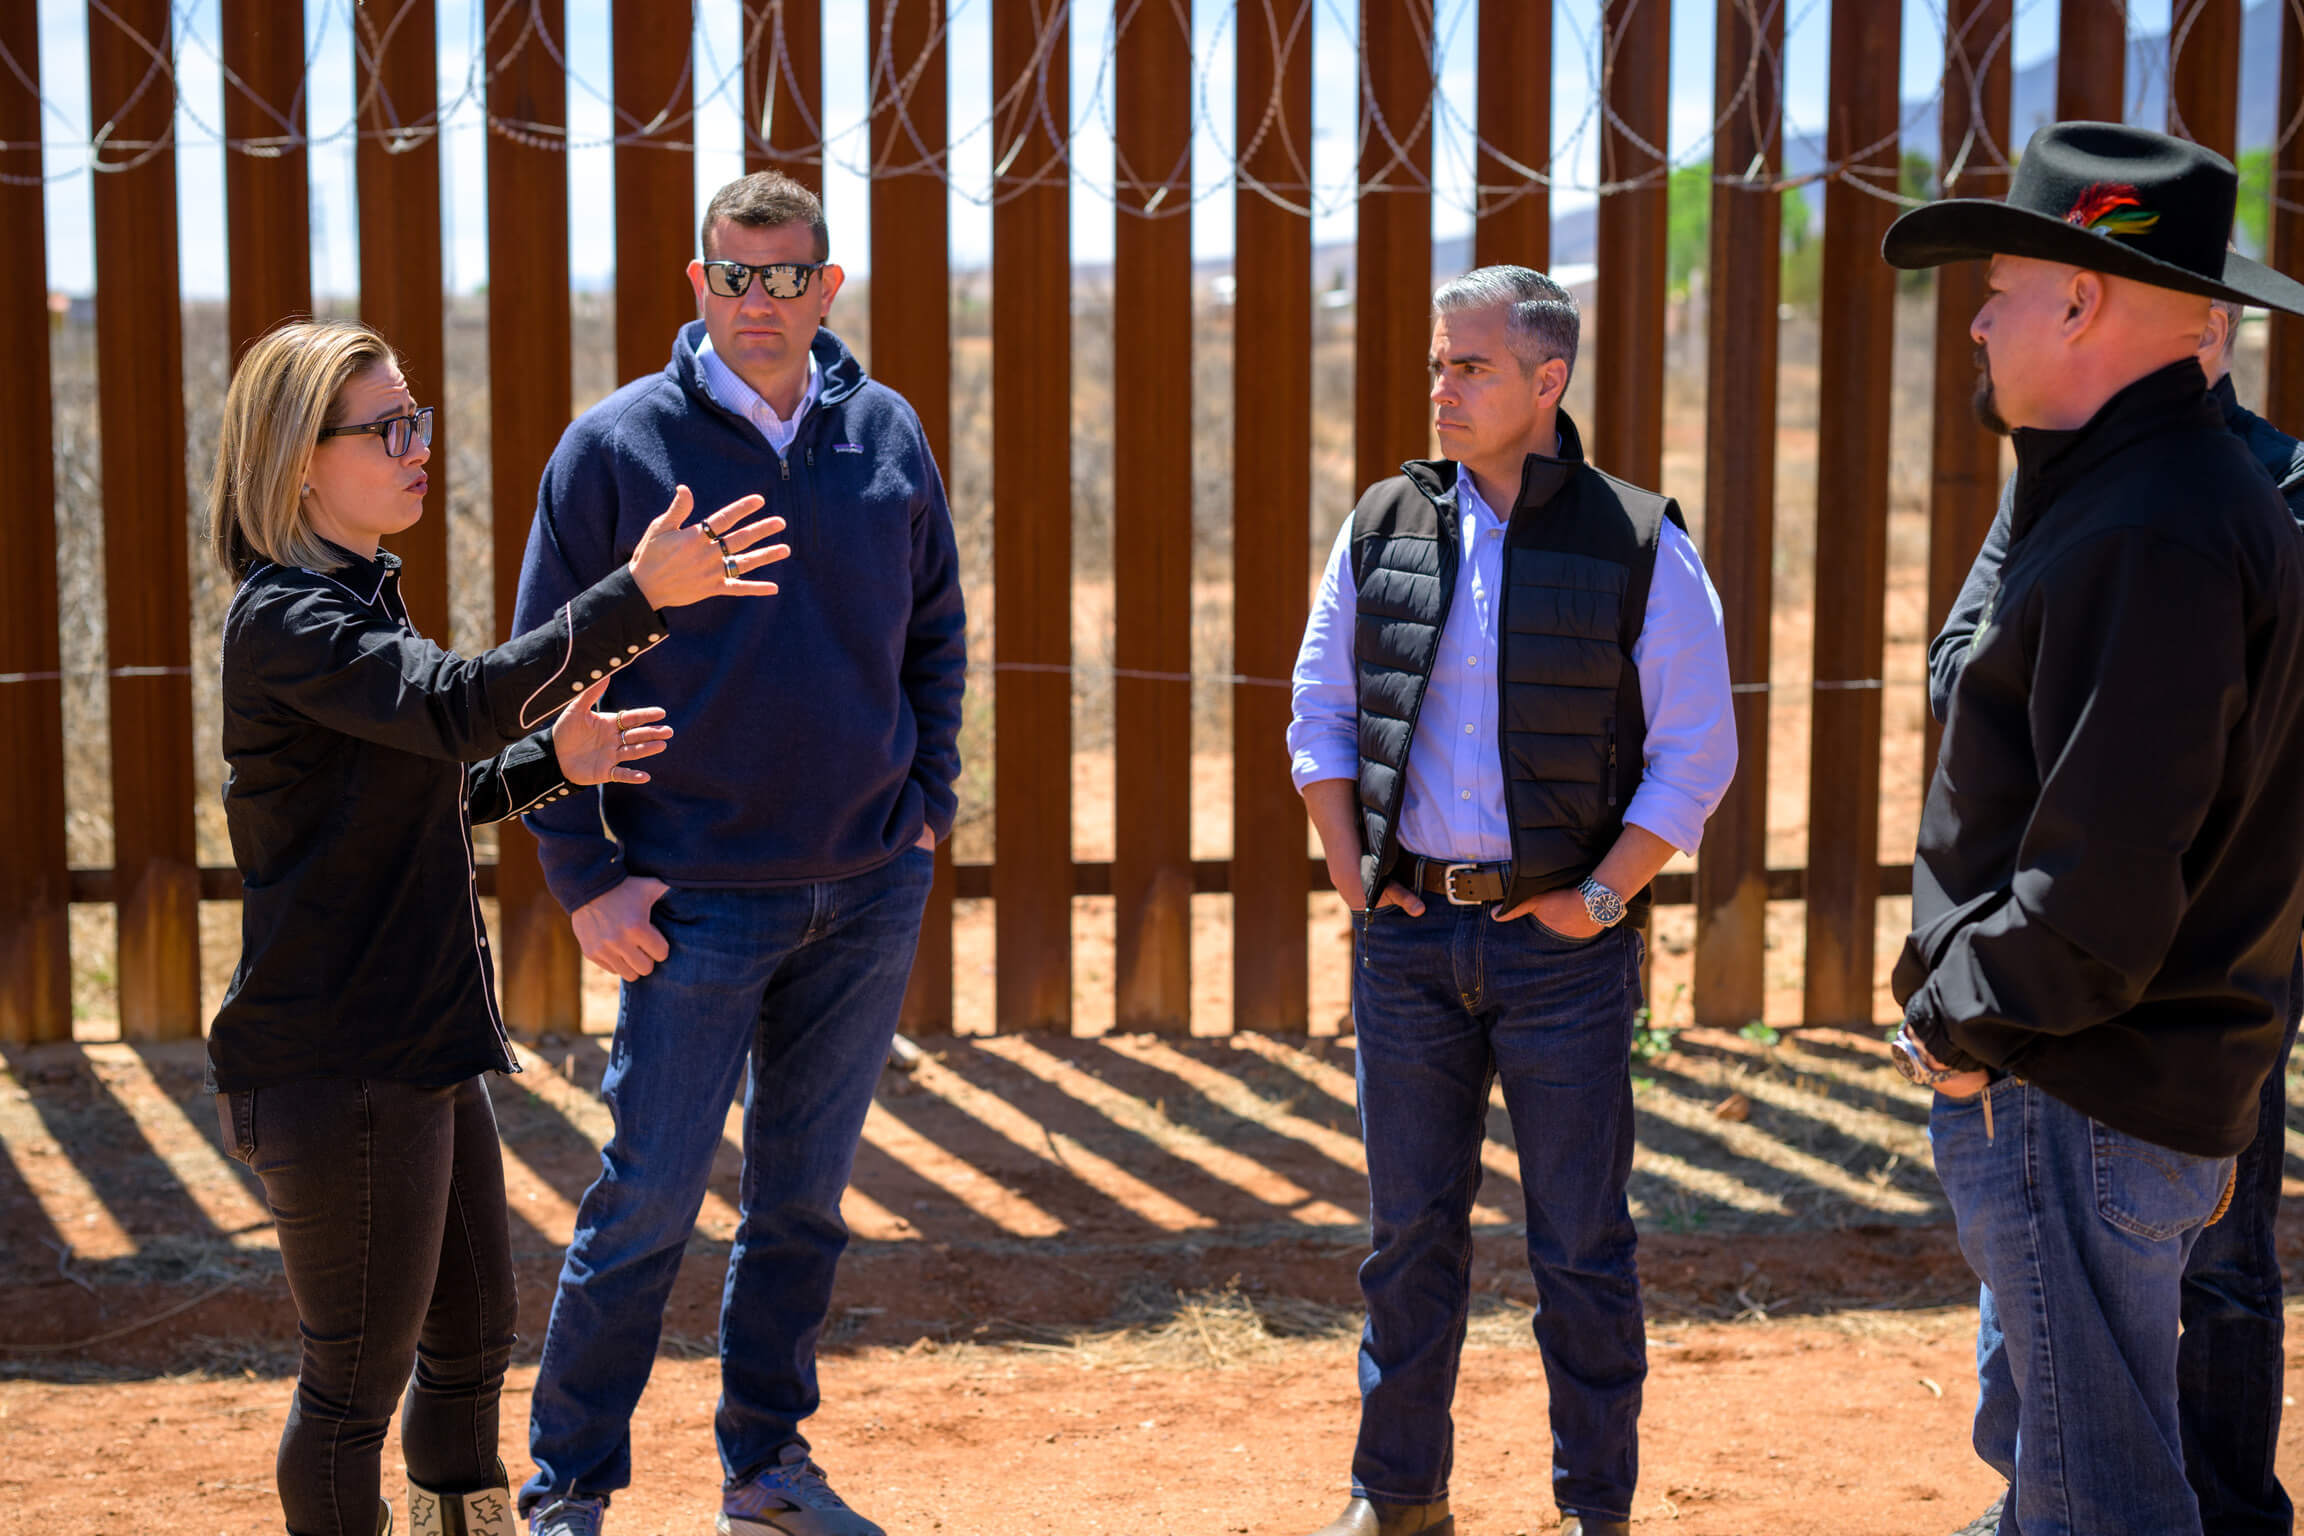 Near Naco Border, Sinema & National Border Patrol Council Lead Bipartisan Congressional Delegation to Examine Crisis Firsthand